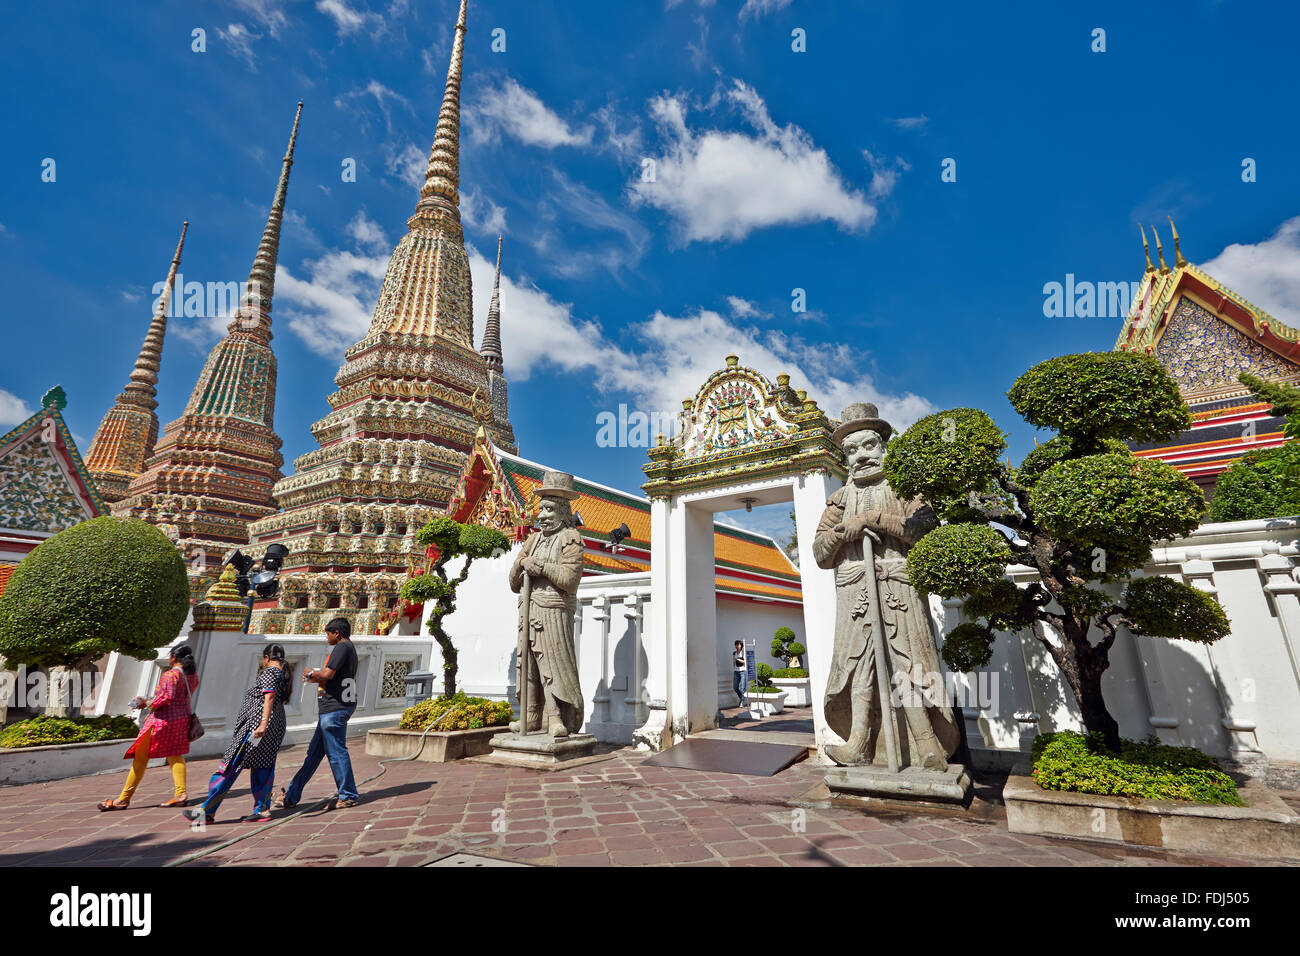 Les gens qui marchent près du Phra Maha Chedi si Rajakarn, les grandes pagodes de quatre Rois dans le temple Wat Pho. Bangkok, Thaïlande. Banque D'Images